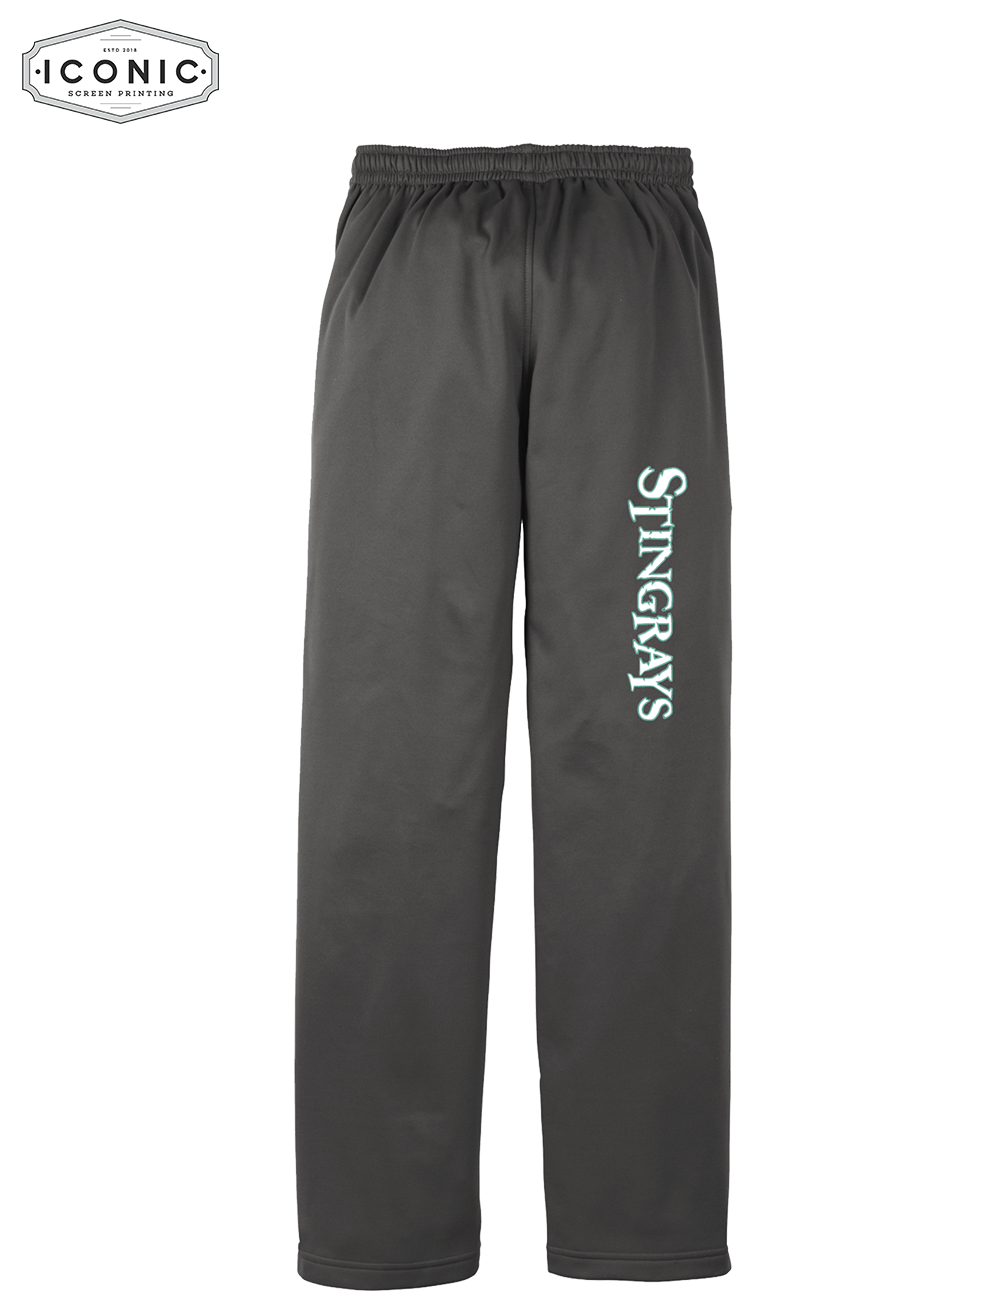 Stingrays Warmups - Sport-Wick Fleece Pant